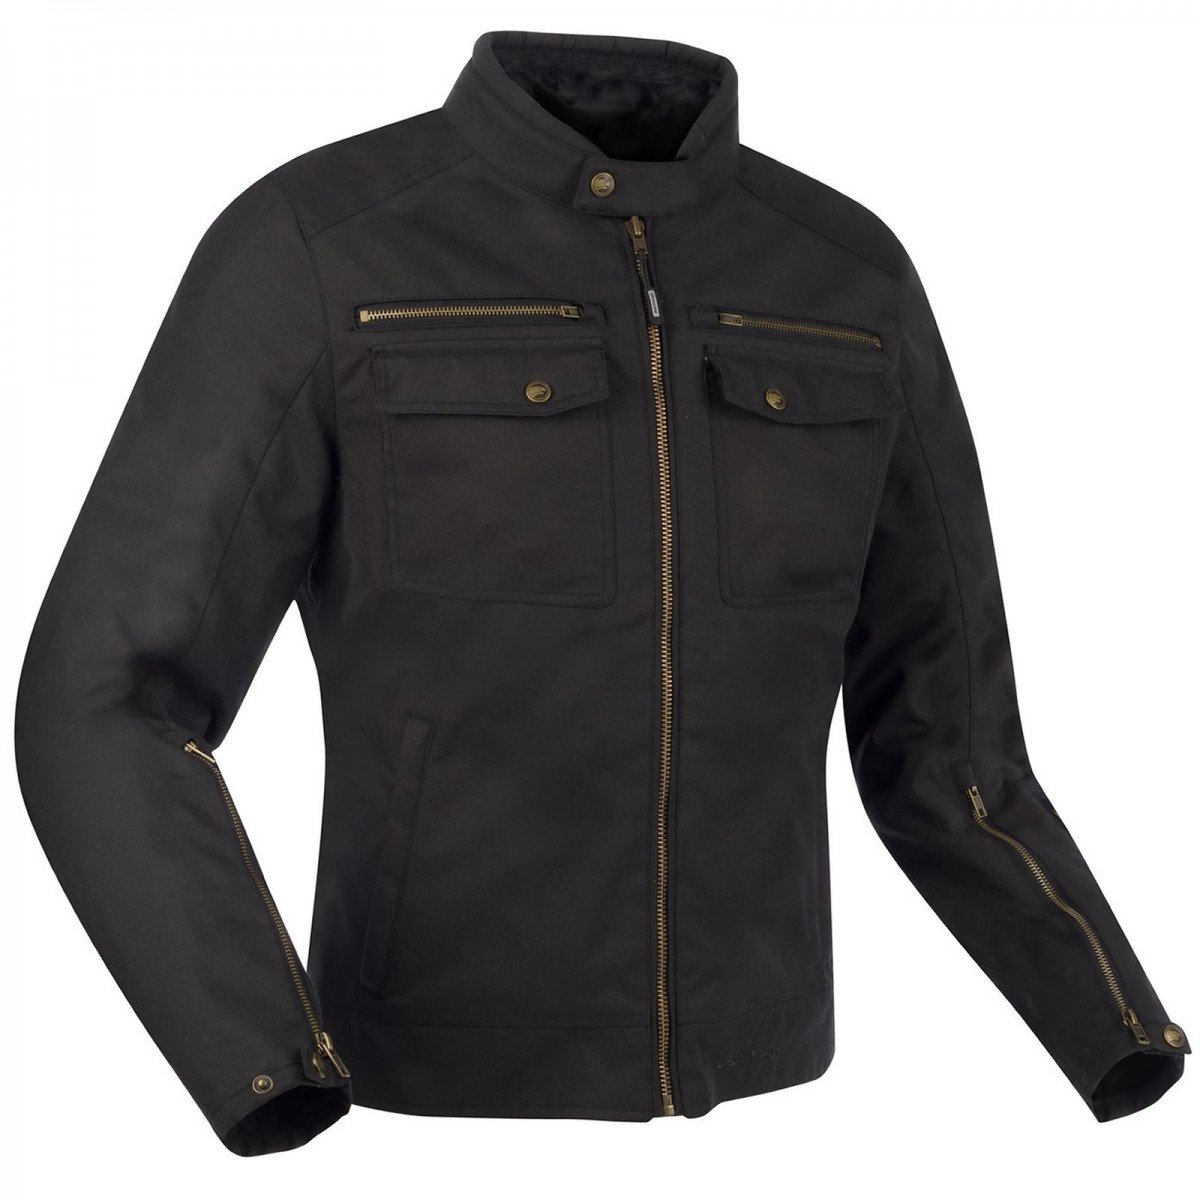 Image of Bering Winton Jacket Black Size 3XL ID 3660815161975